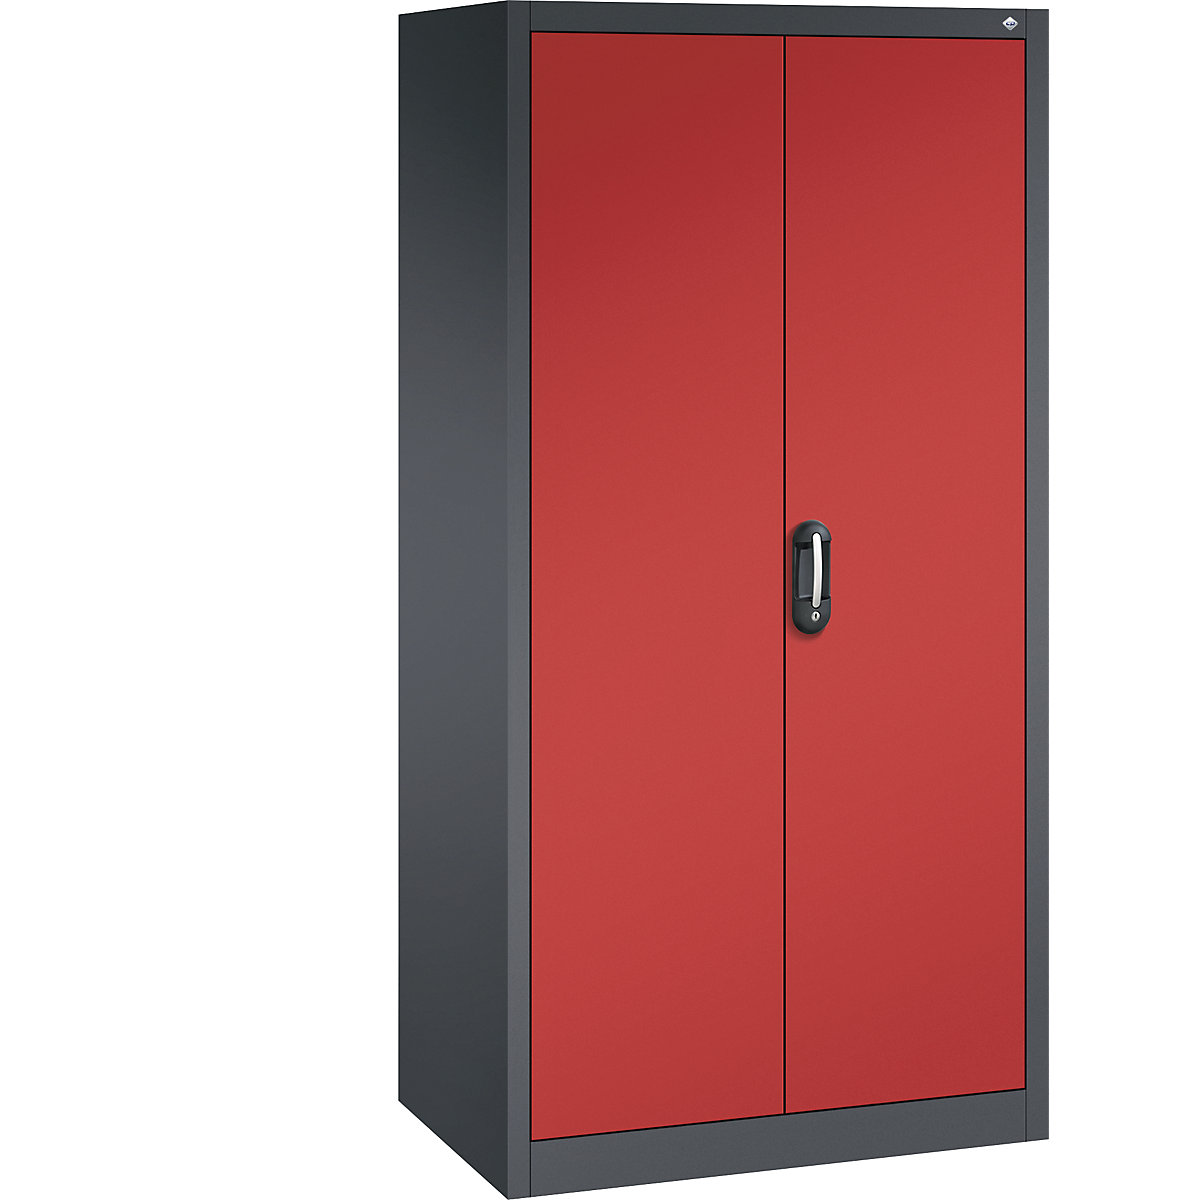 Univerzální skříň ACURADO – C+P, š x h 930 x 600 mm, černošedá / ohnivě červená-14